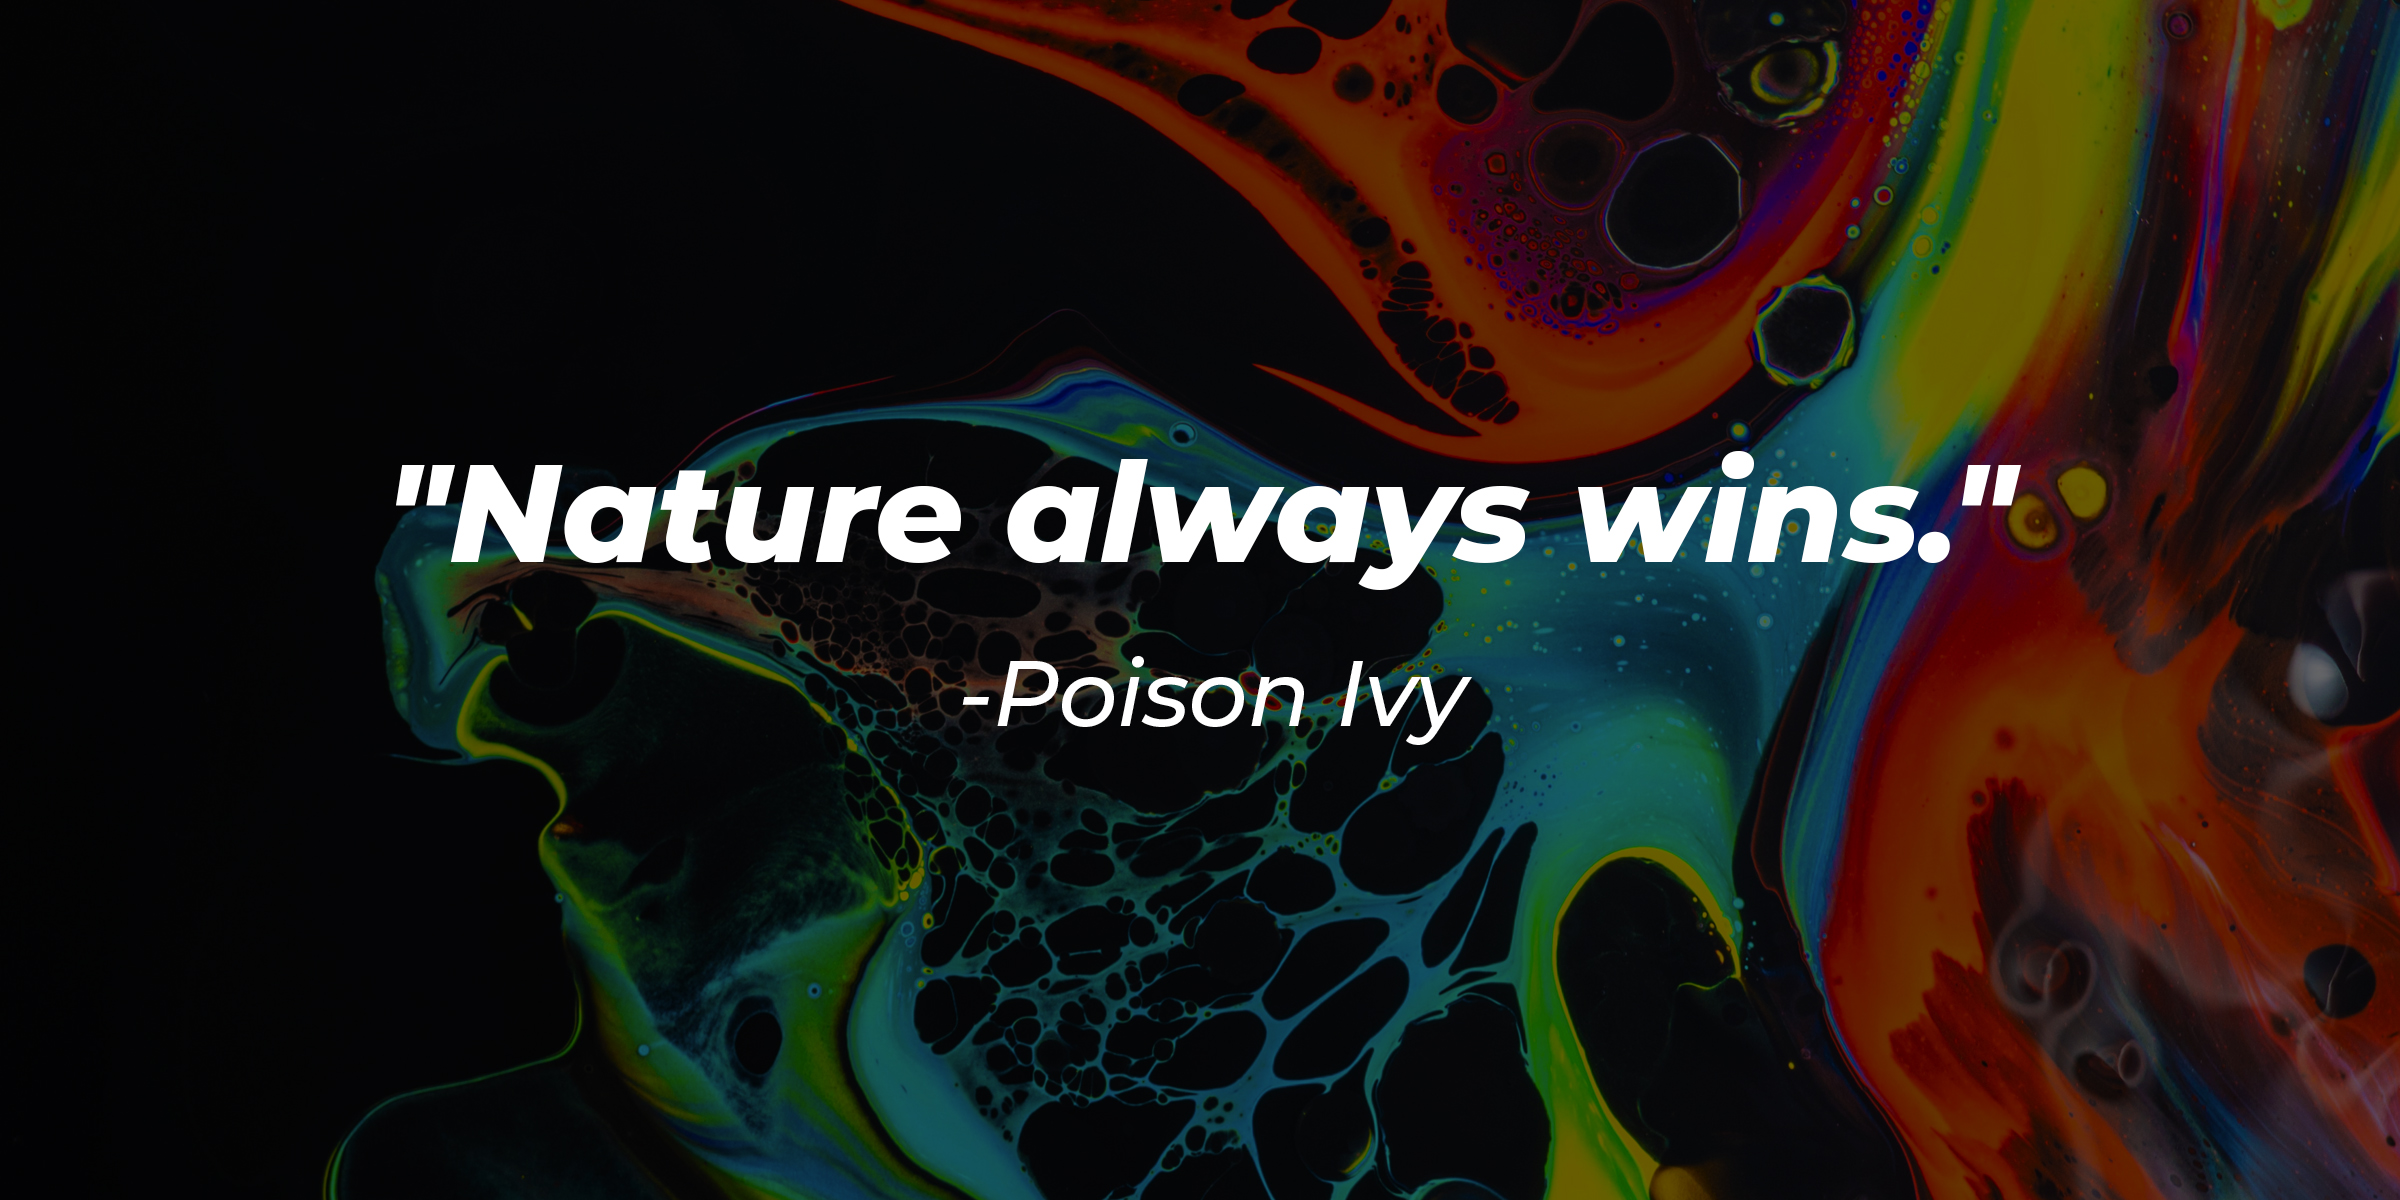 Poison Ivy’s quote: “Nature always wins.” | Source: Unsplash